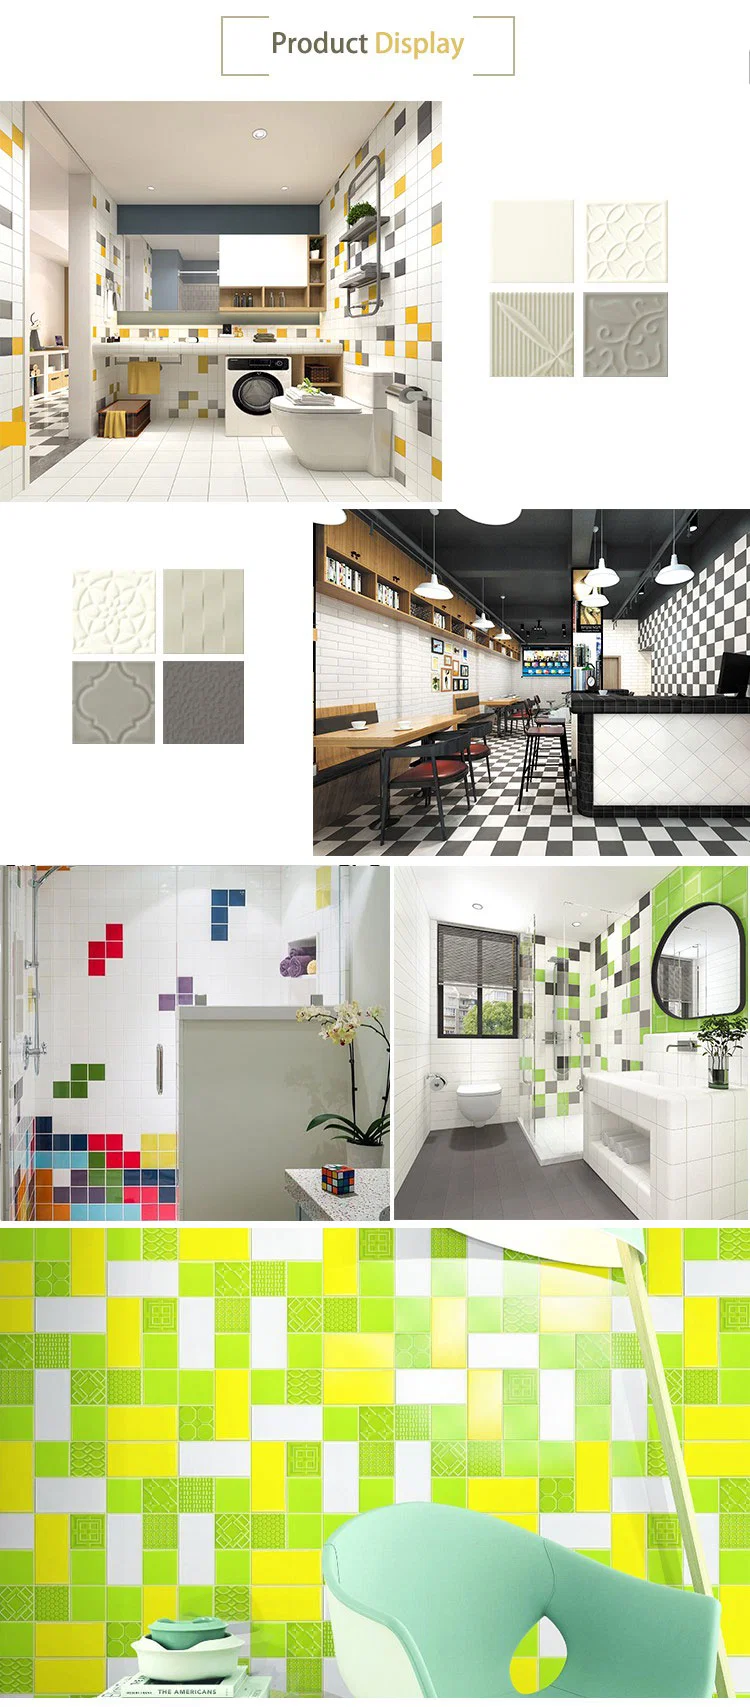 Decorative Kitchen Bathroom Wall Design 100X100mm Ceramic Tiles